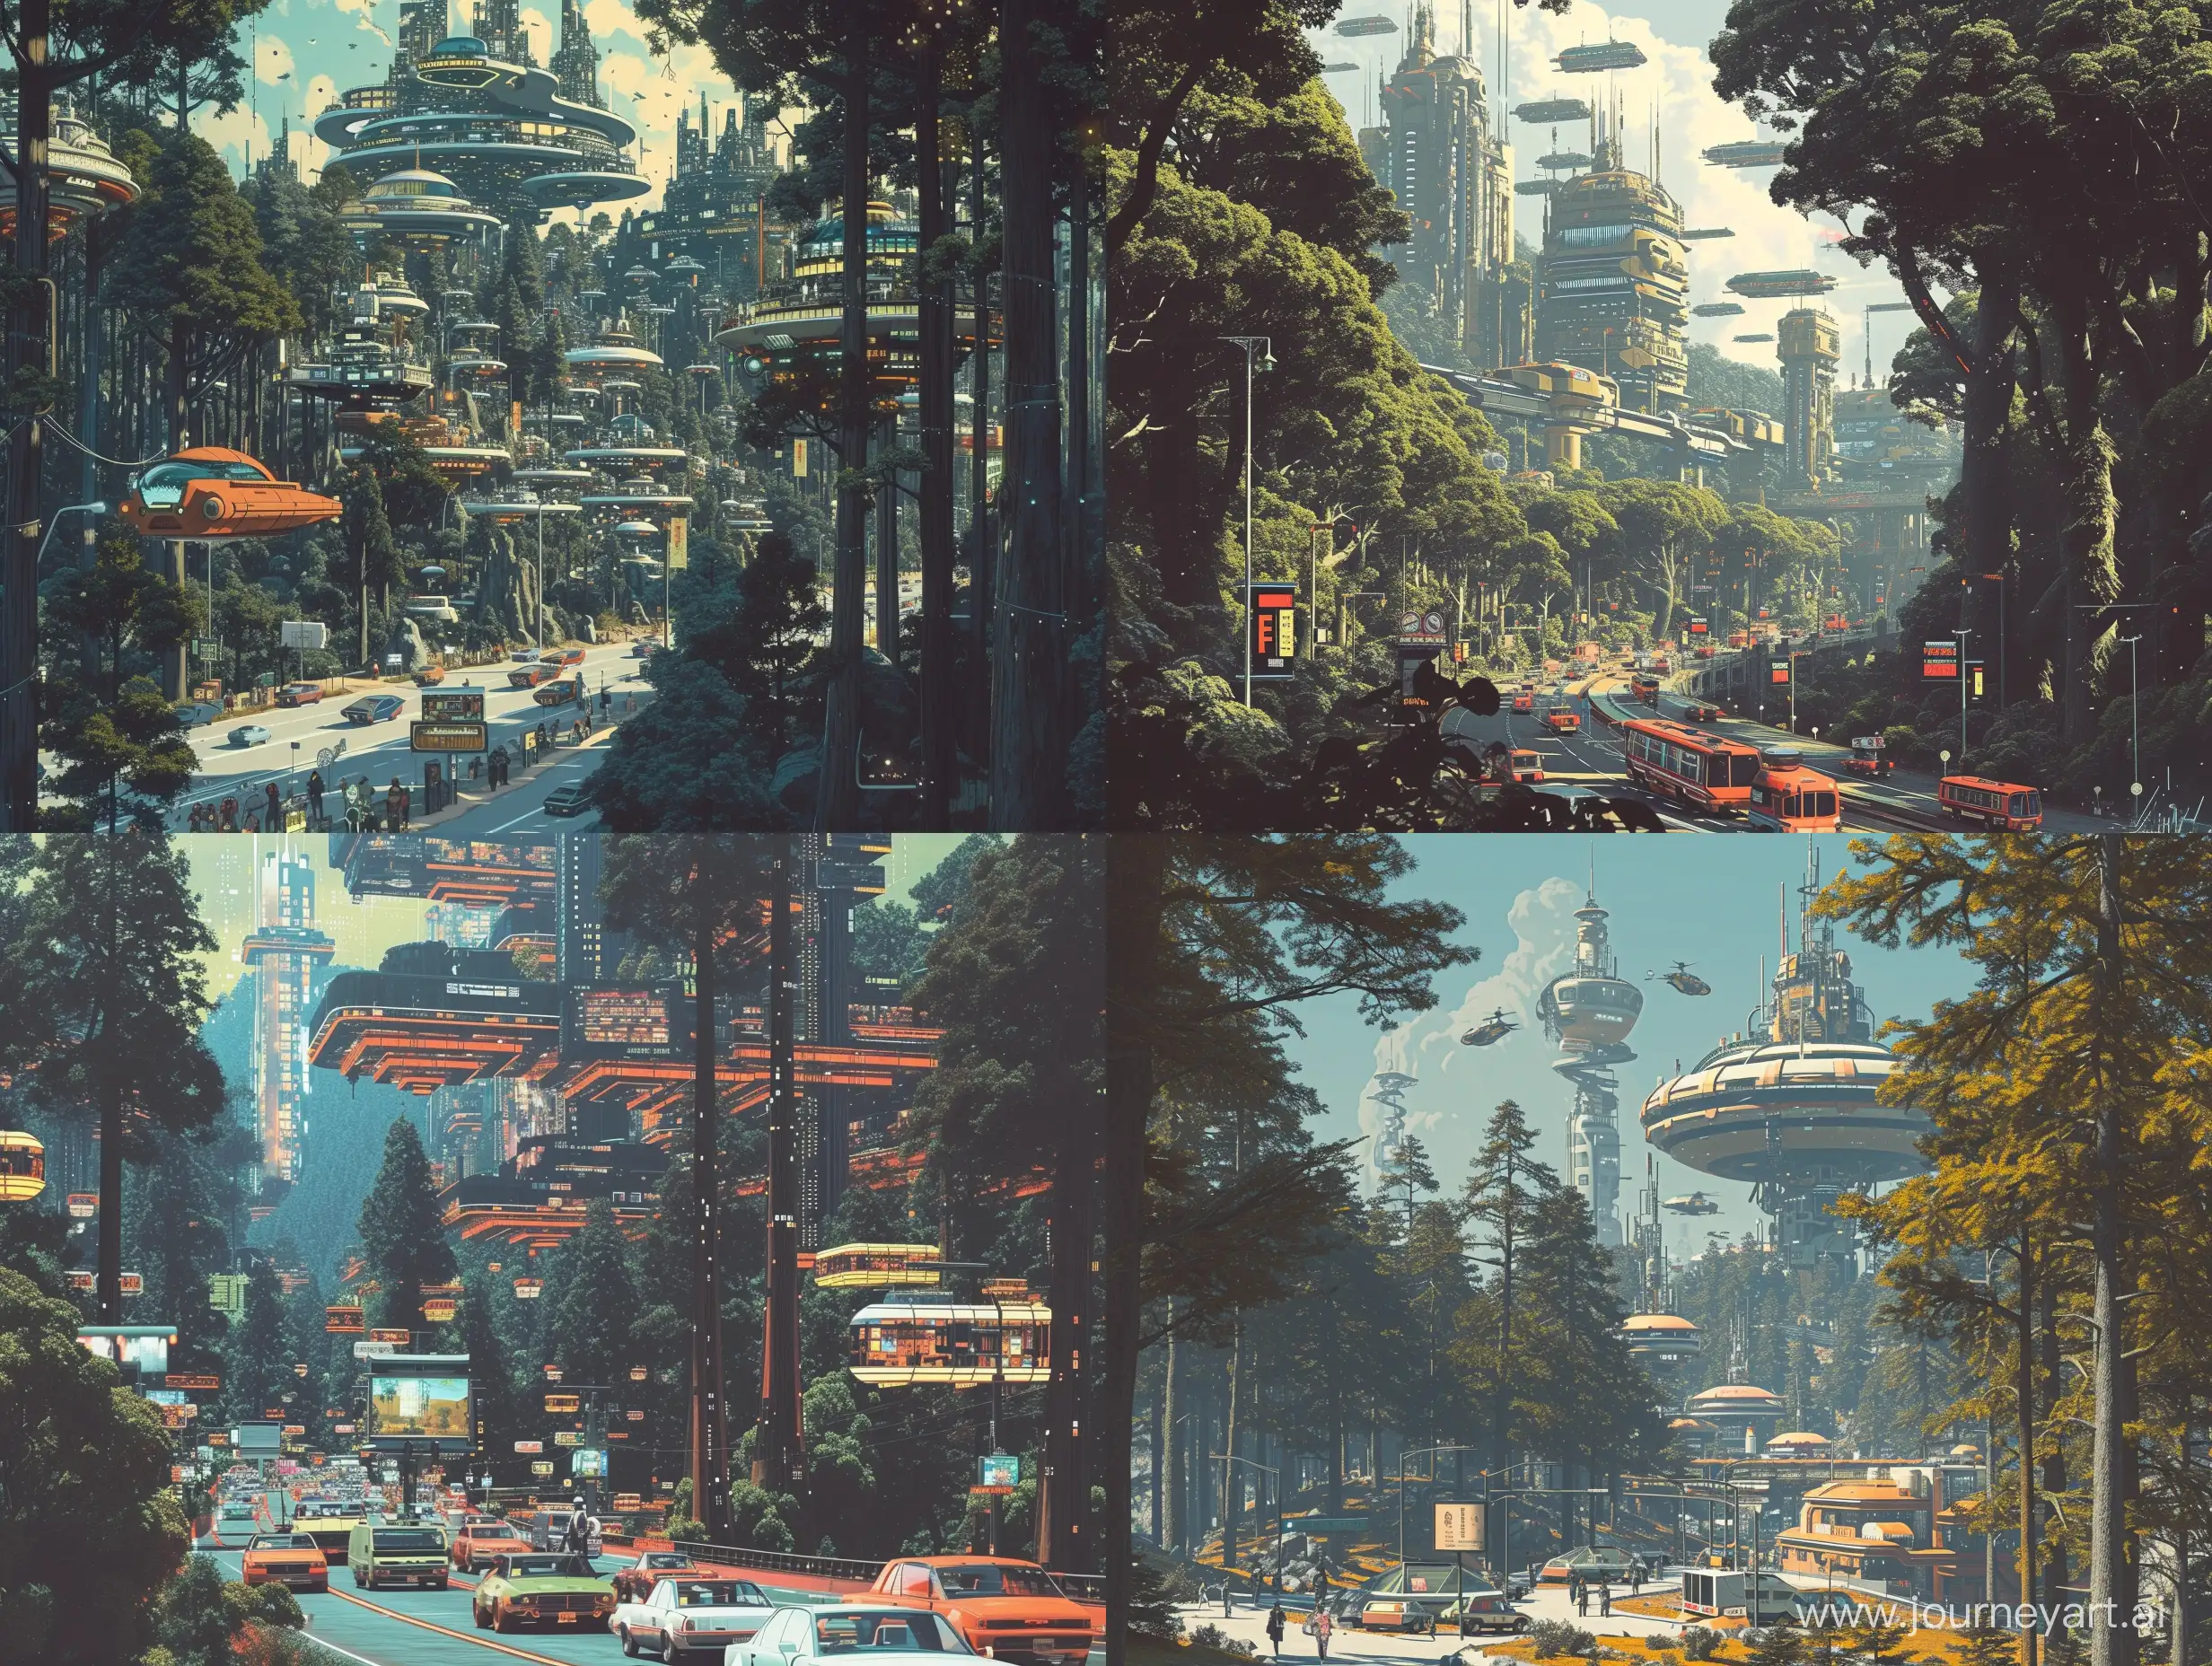 Futuristic-RetroForest-Cityscape-80s-Vibes-and-Chillsynthwave-Nostalgia